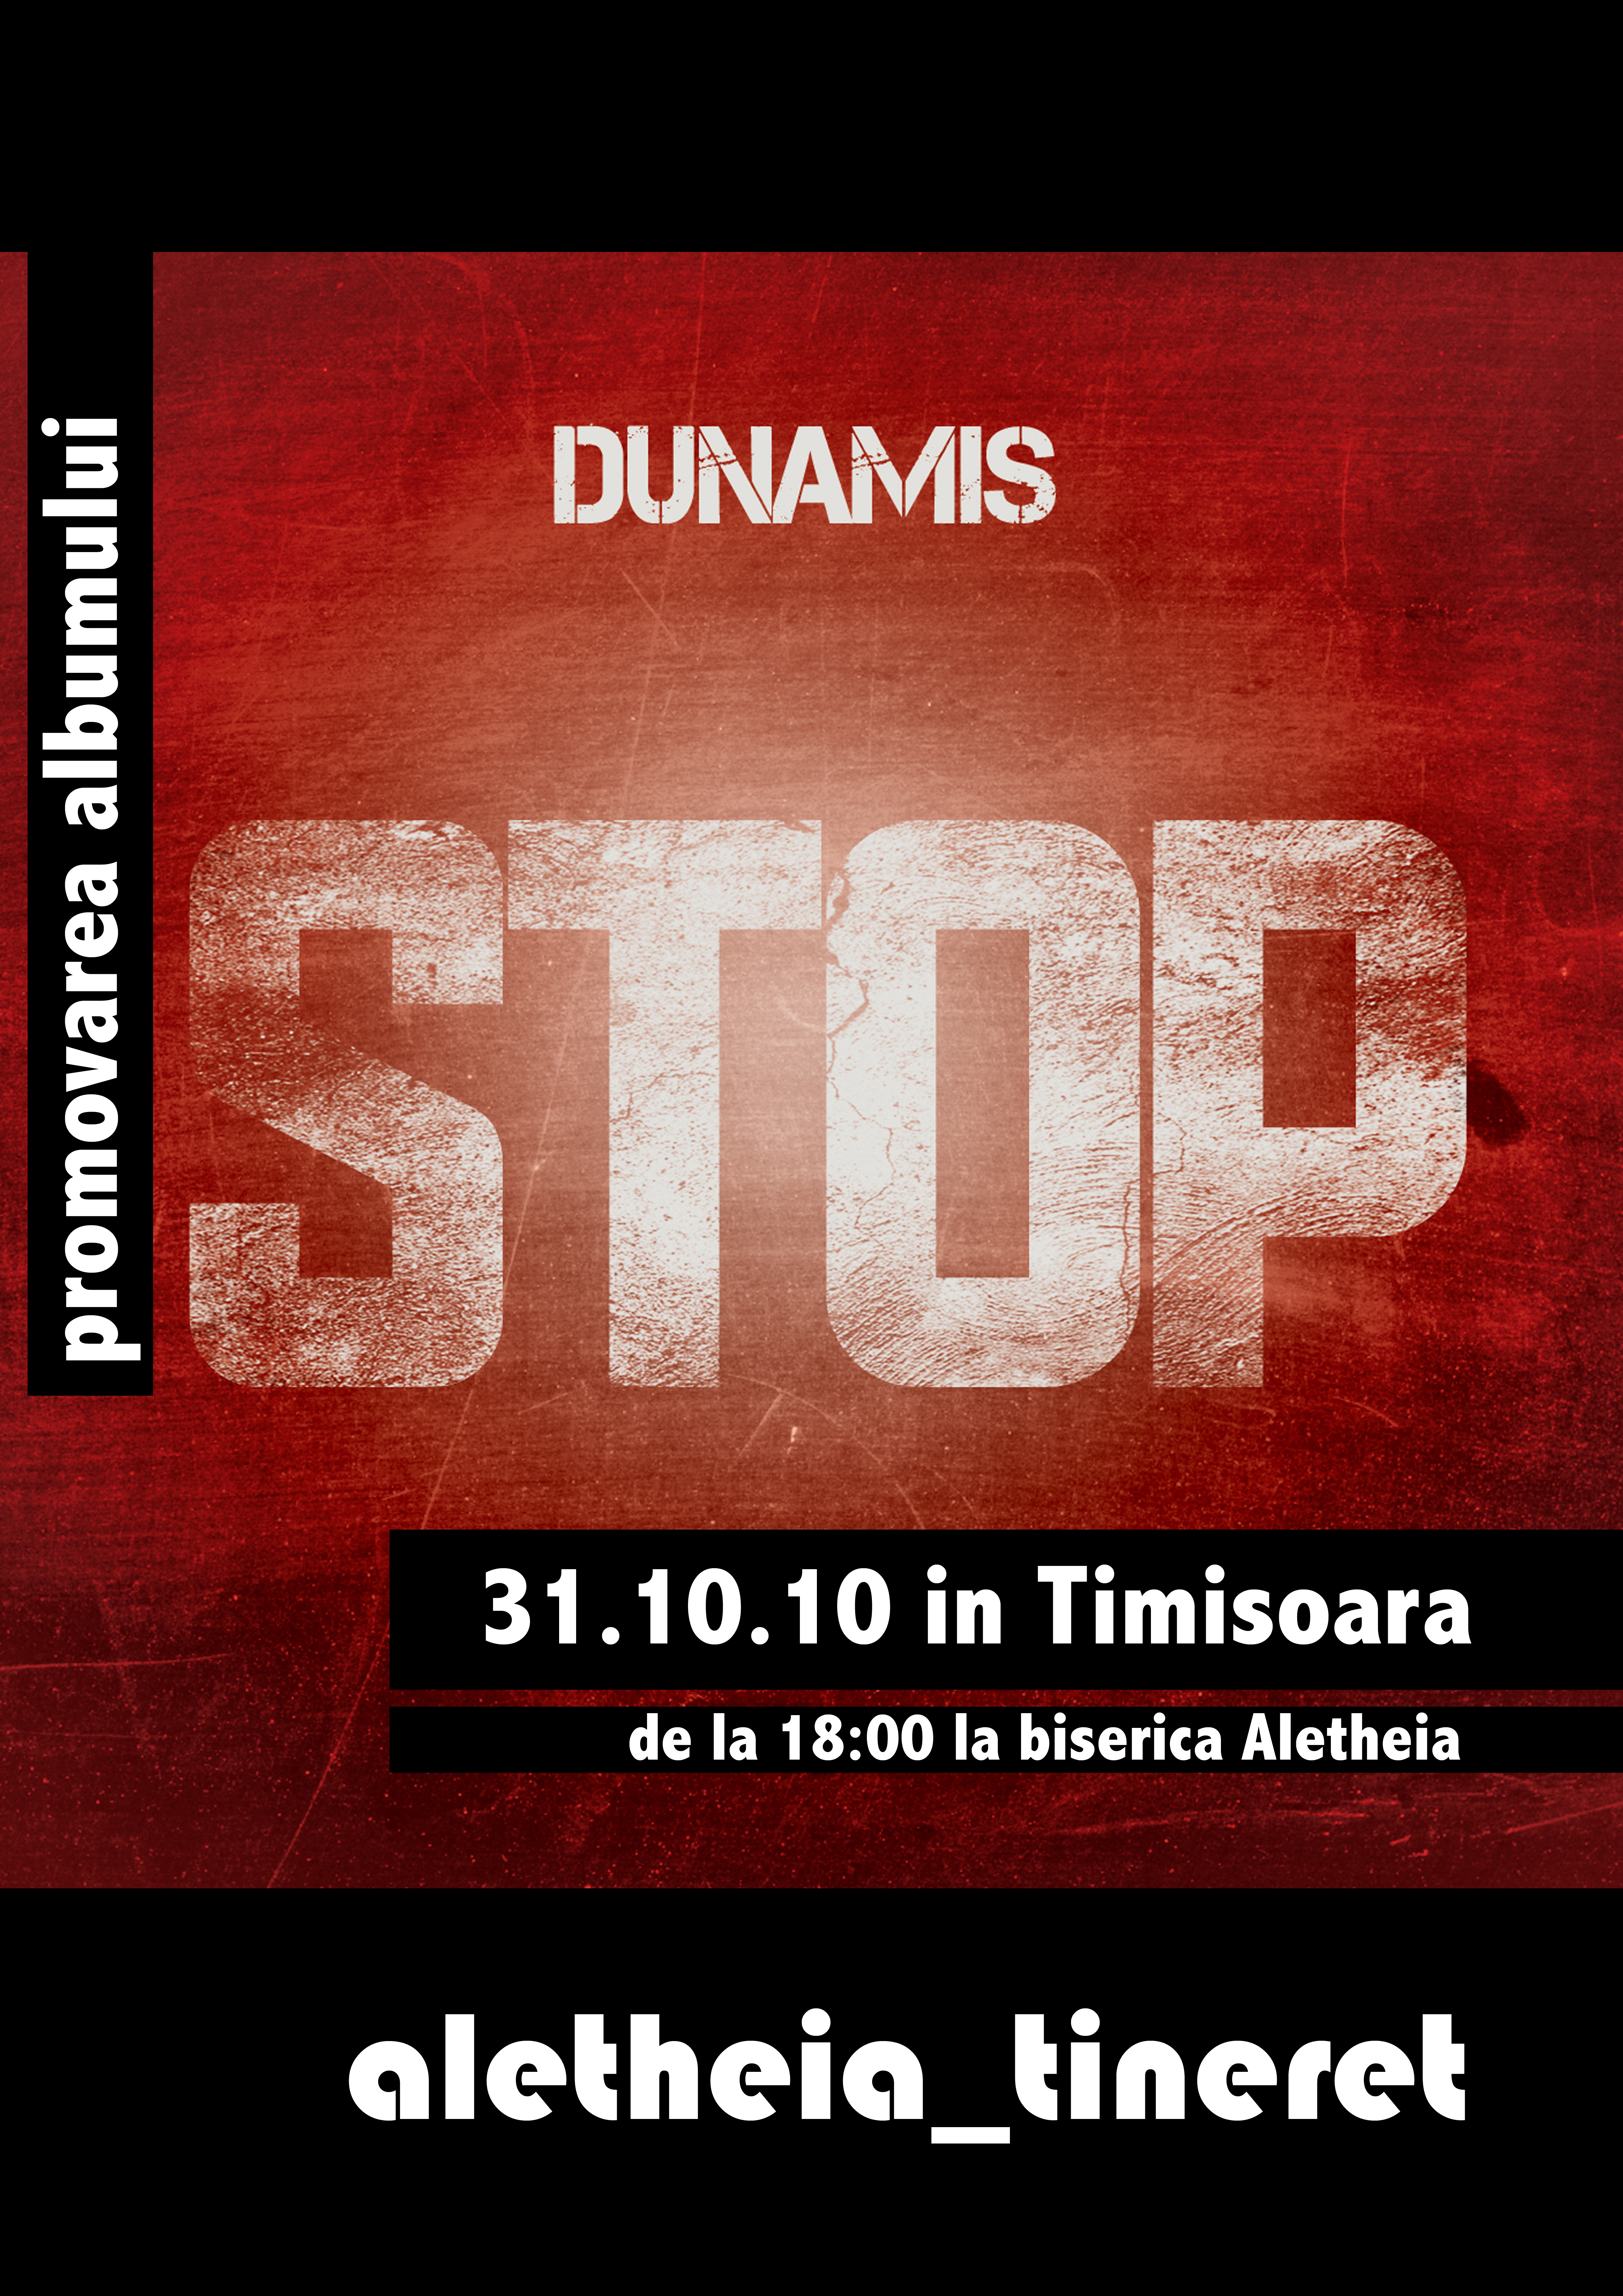 Concert Dunamis la Alhetheia Timisoara